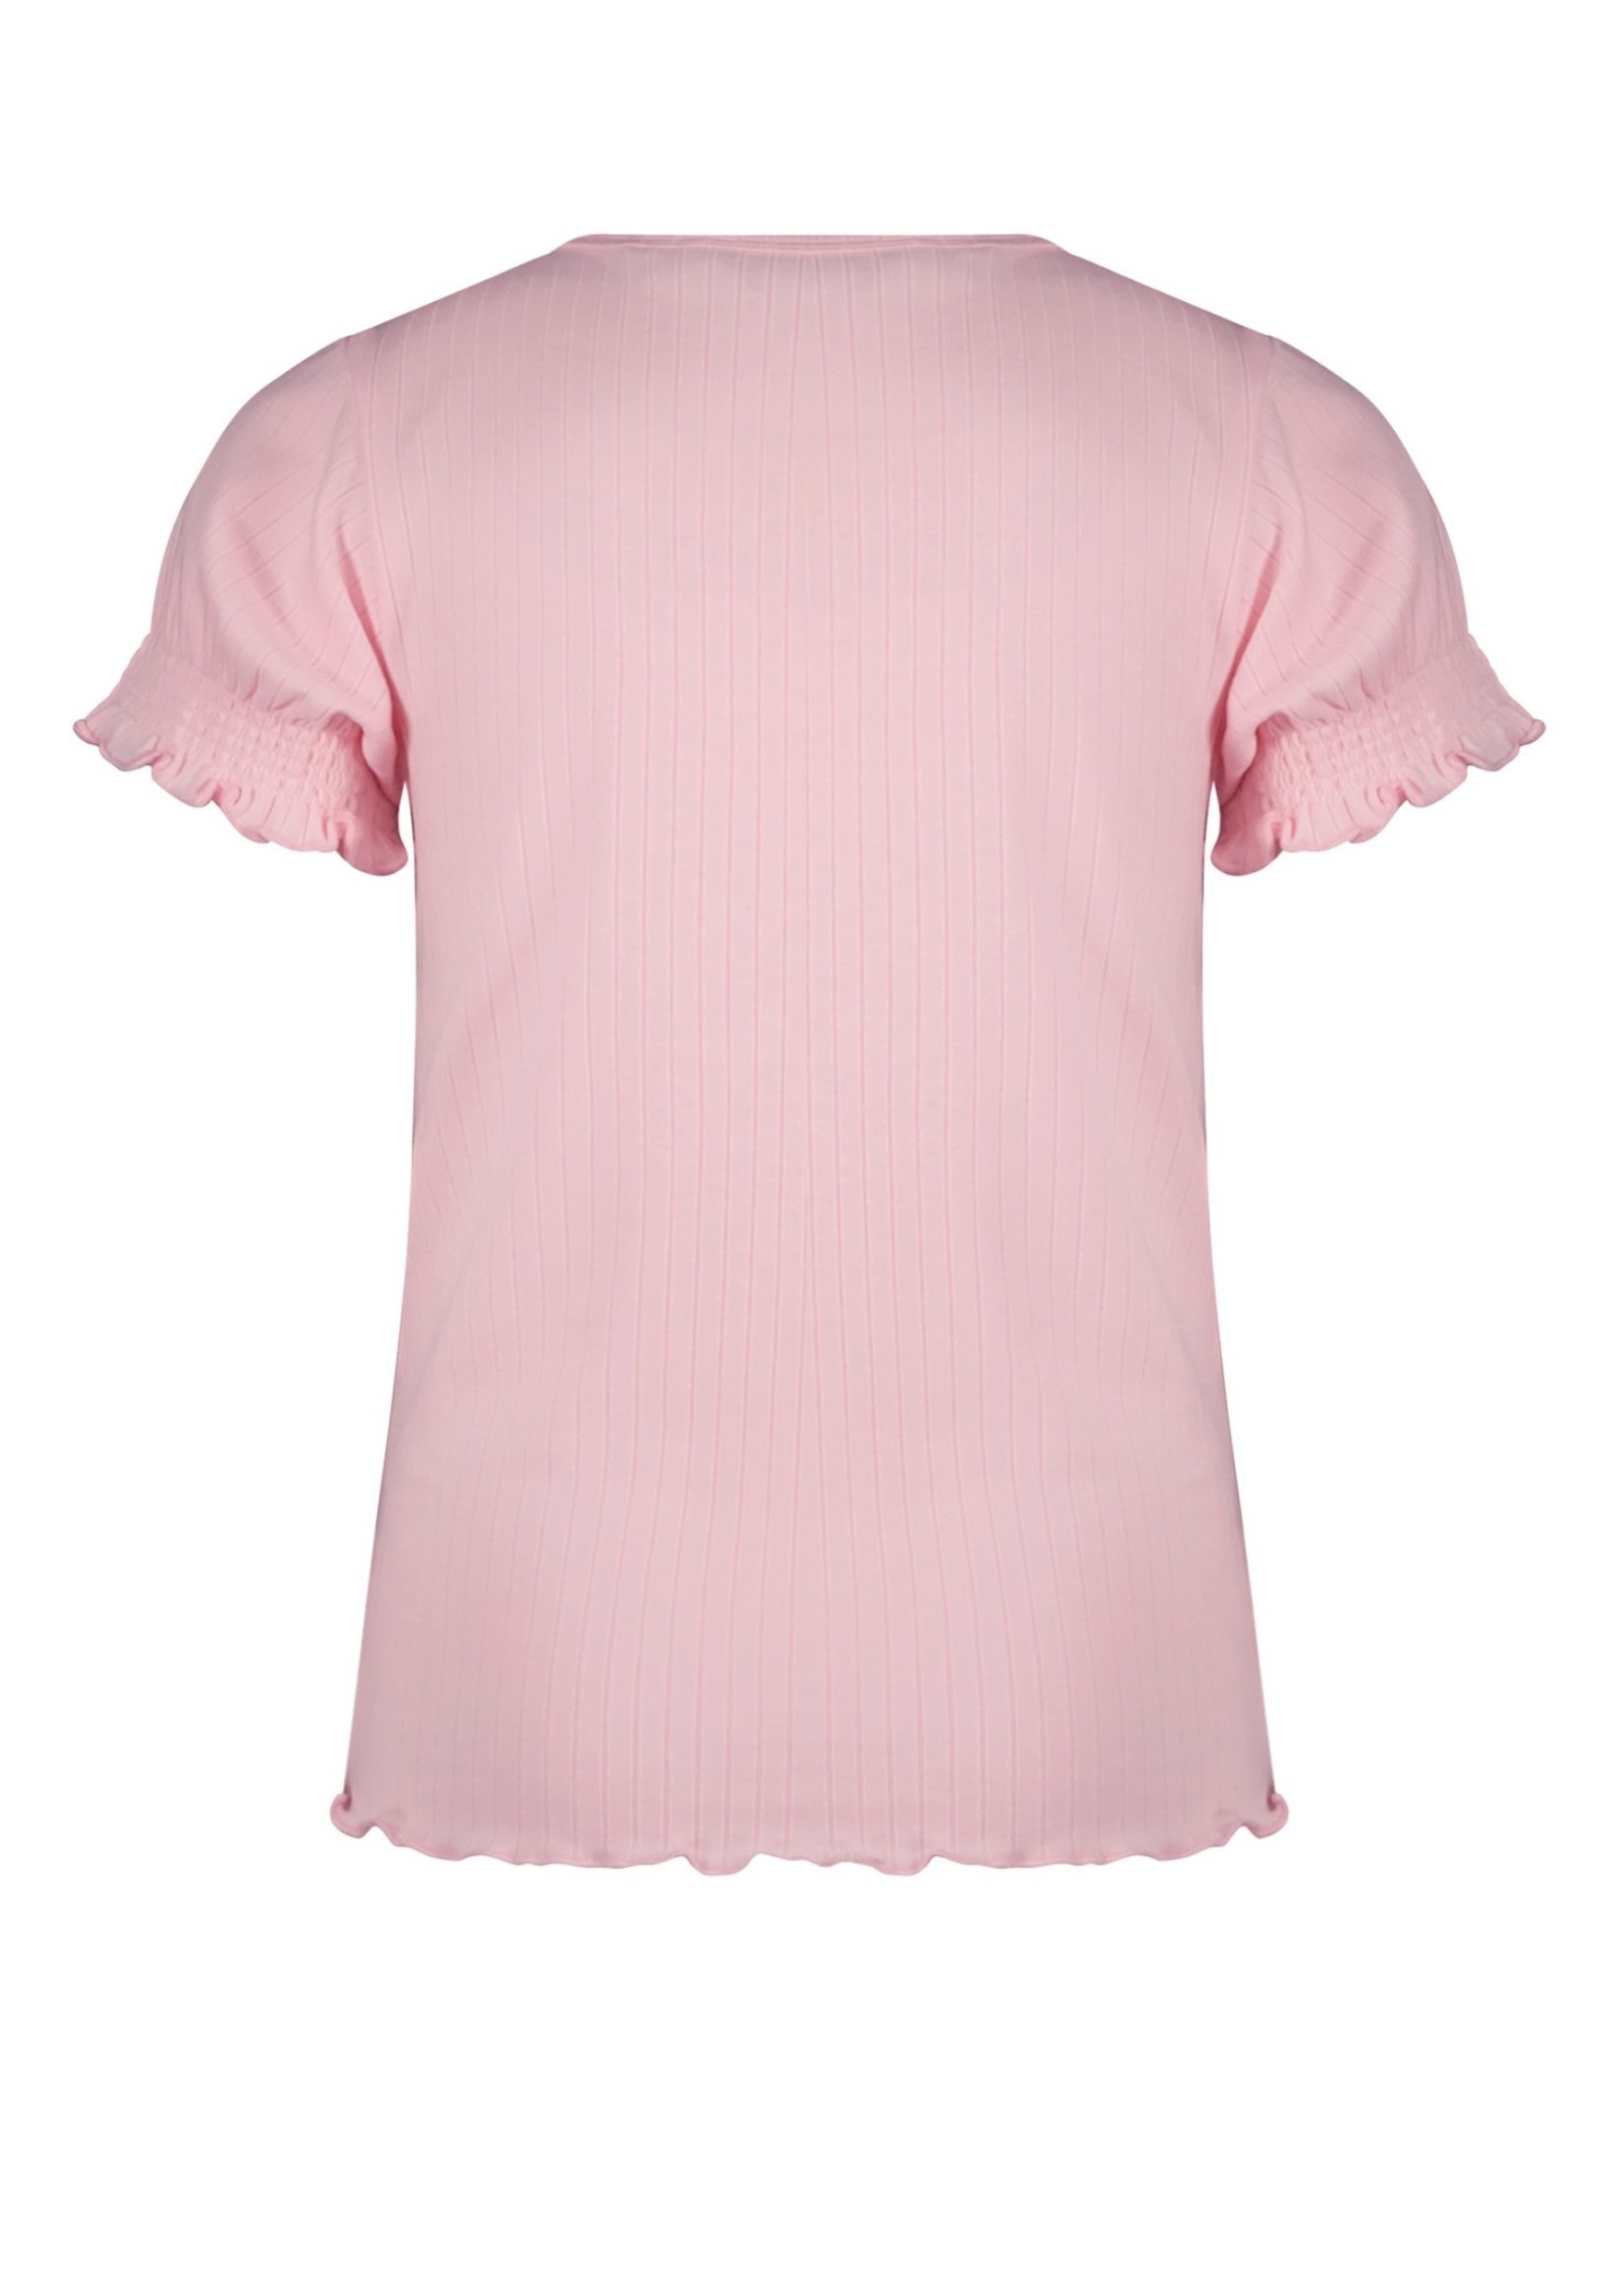 NoNo NoNo Kyran rib tshirt half sleeve with smocked sleevecuffs + embro at shoulder N303-5417 Cherry Blossom